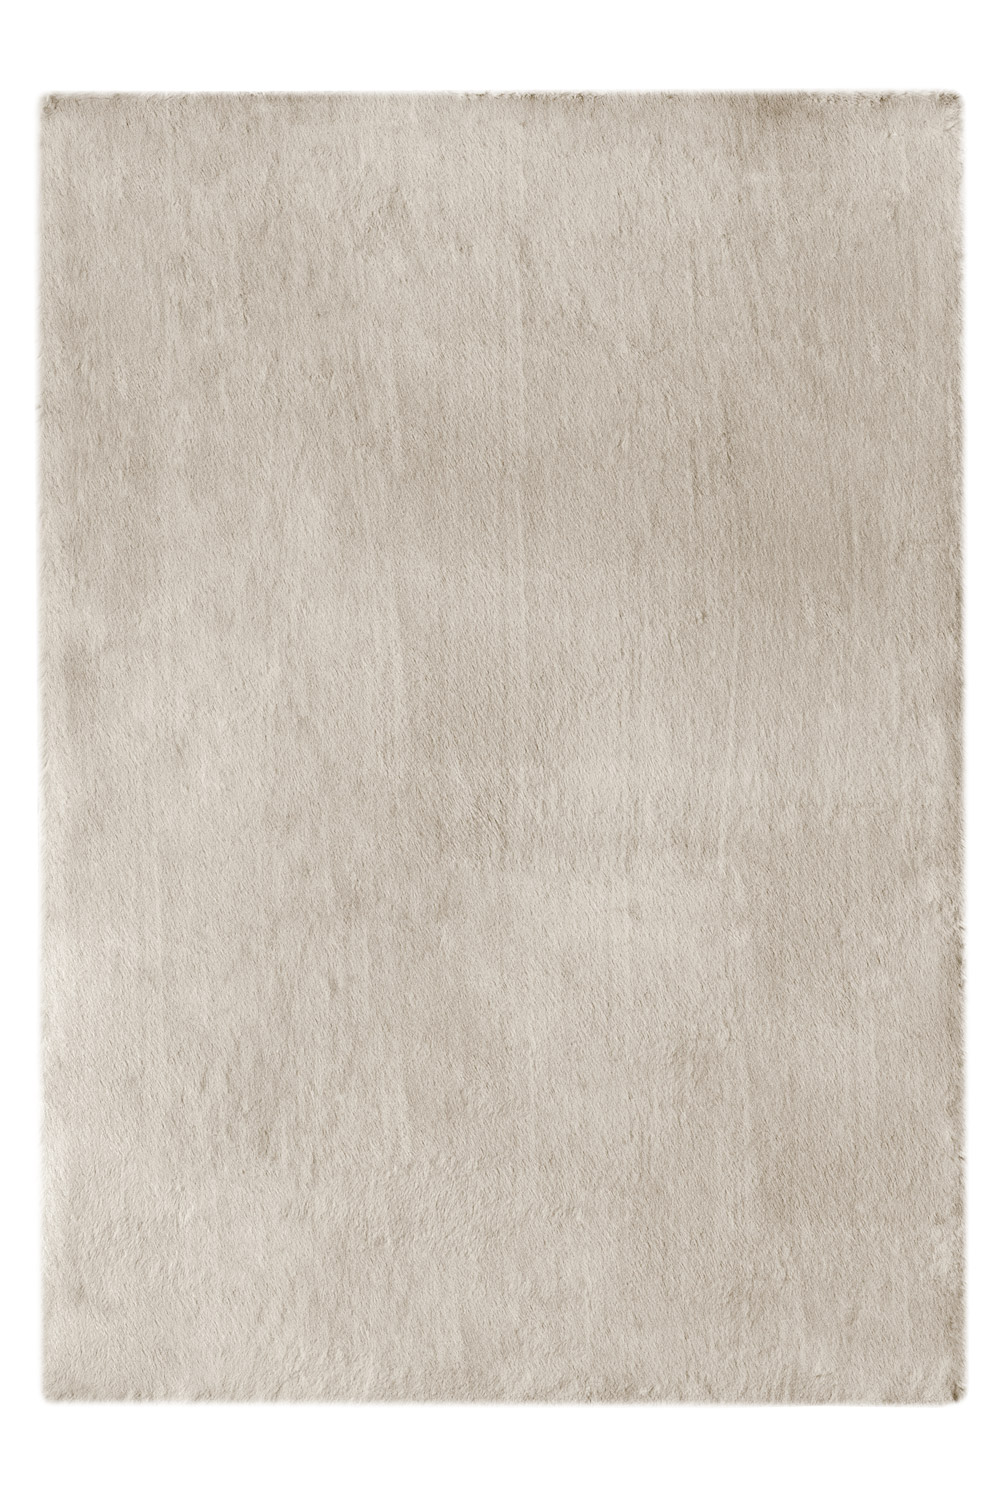 Kusový koberec HEAVEN 800 Beige 120x170 cm